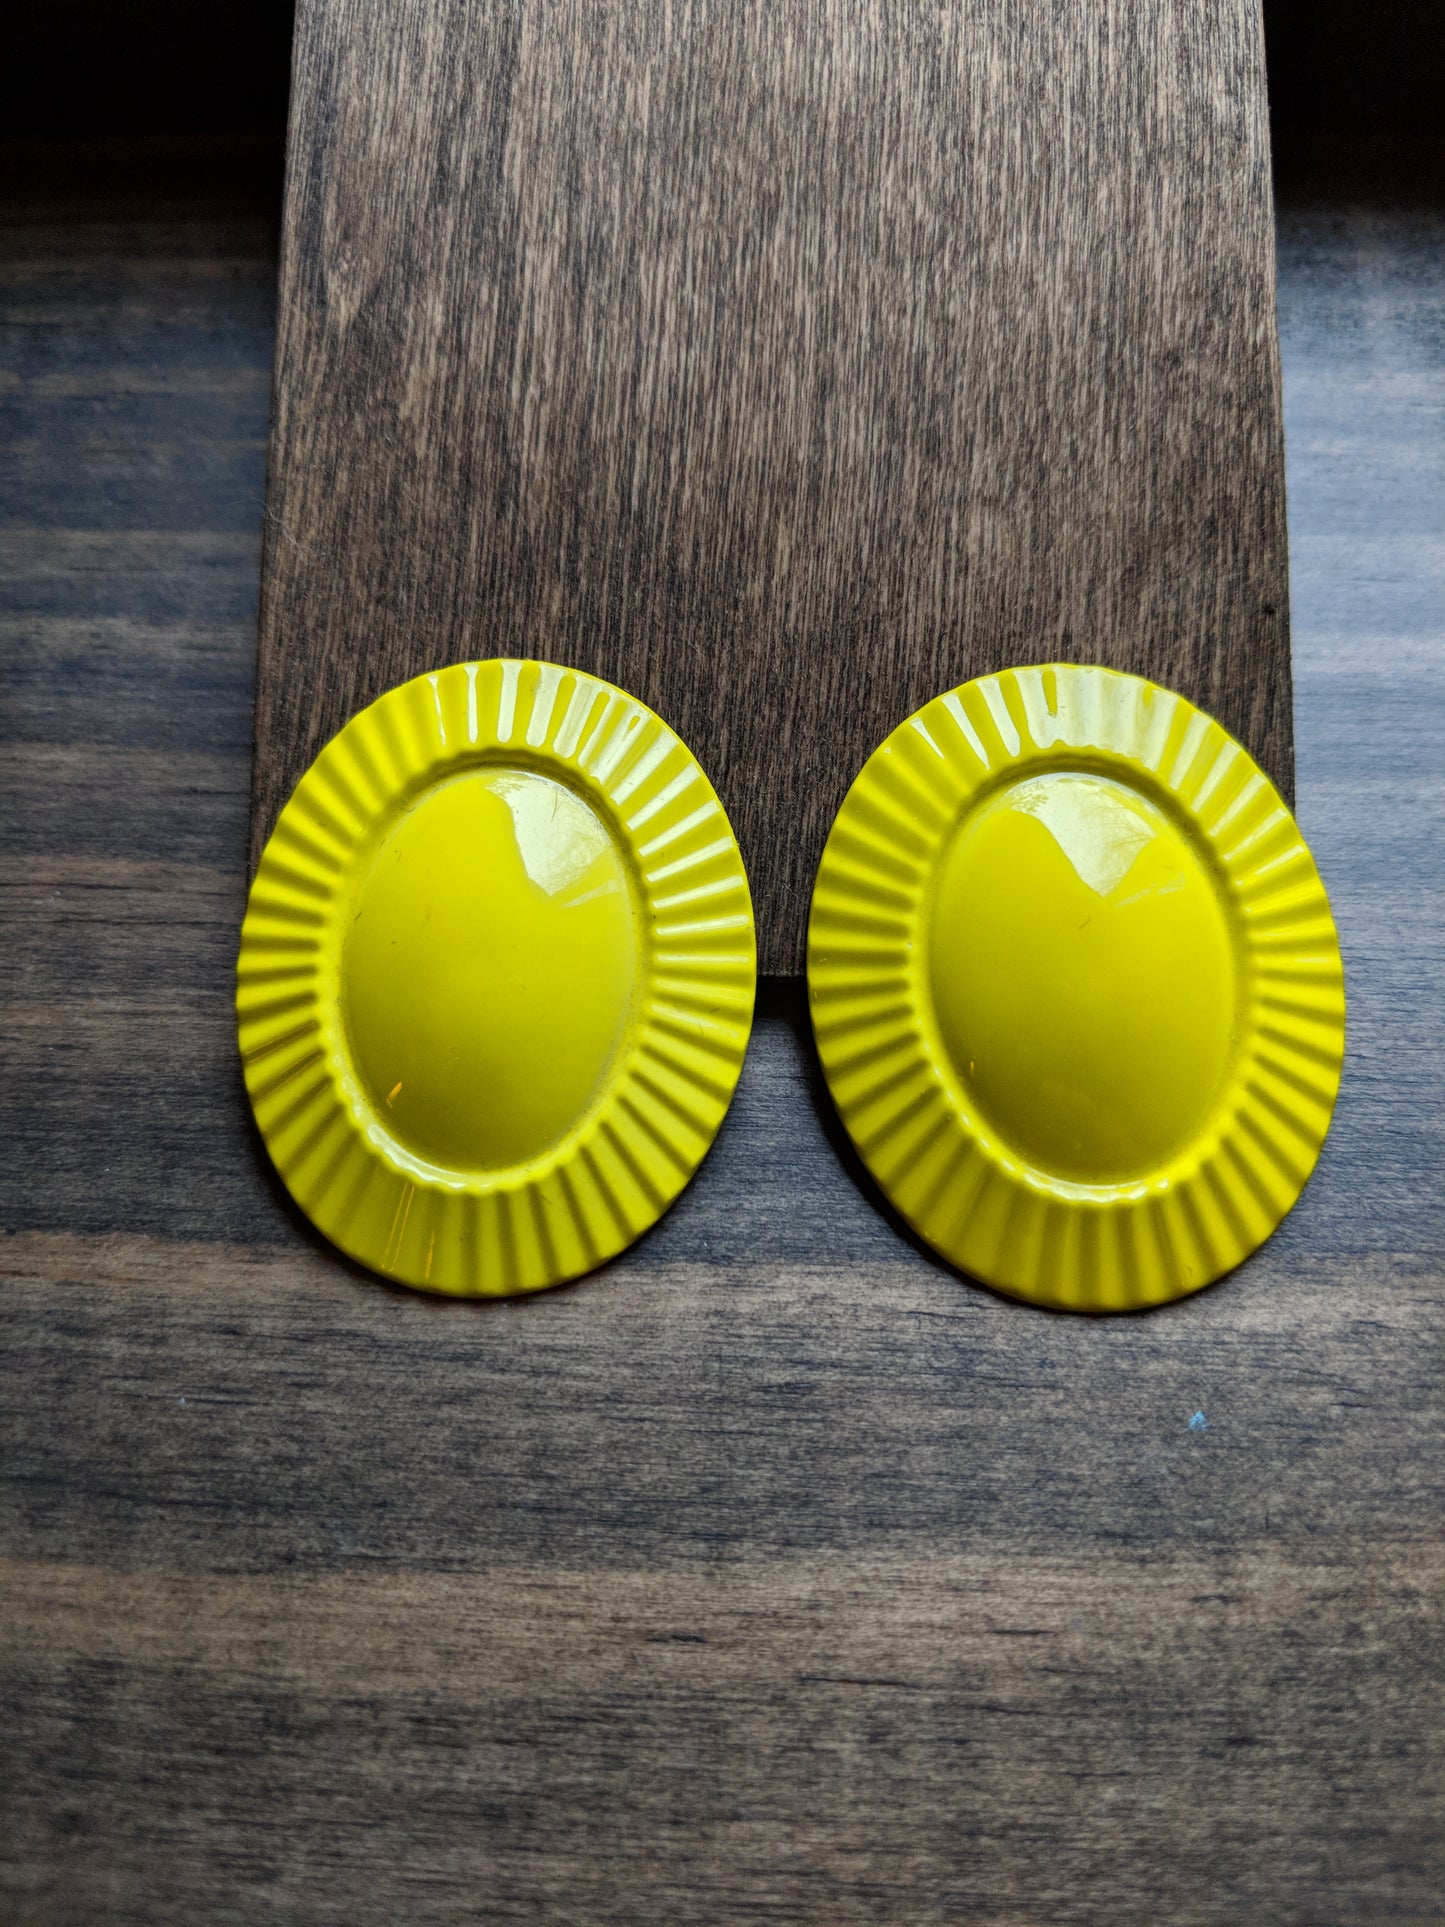 Vintage 80s/90s Oval Yellow Earrings